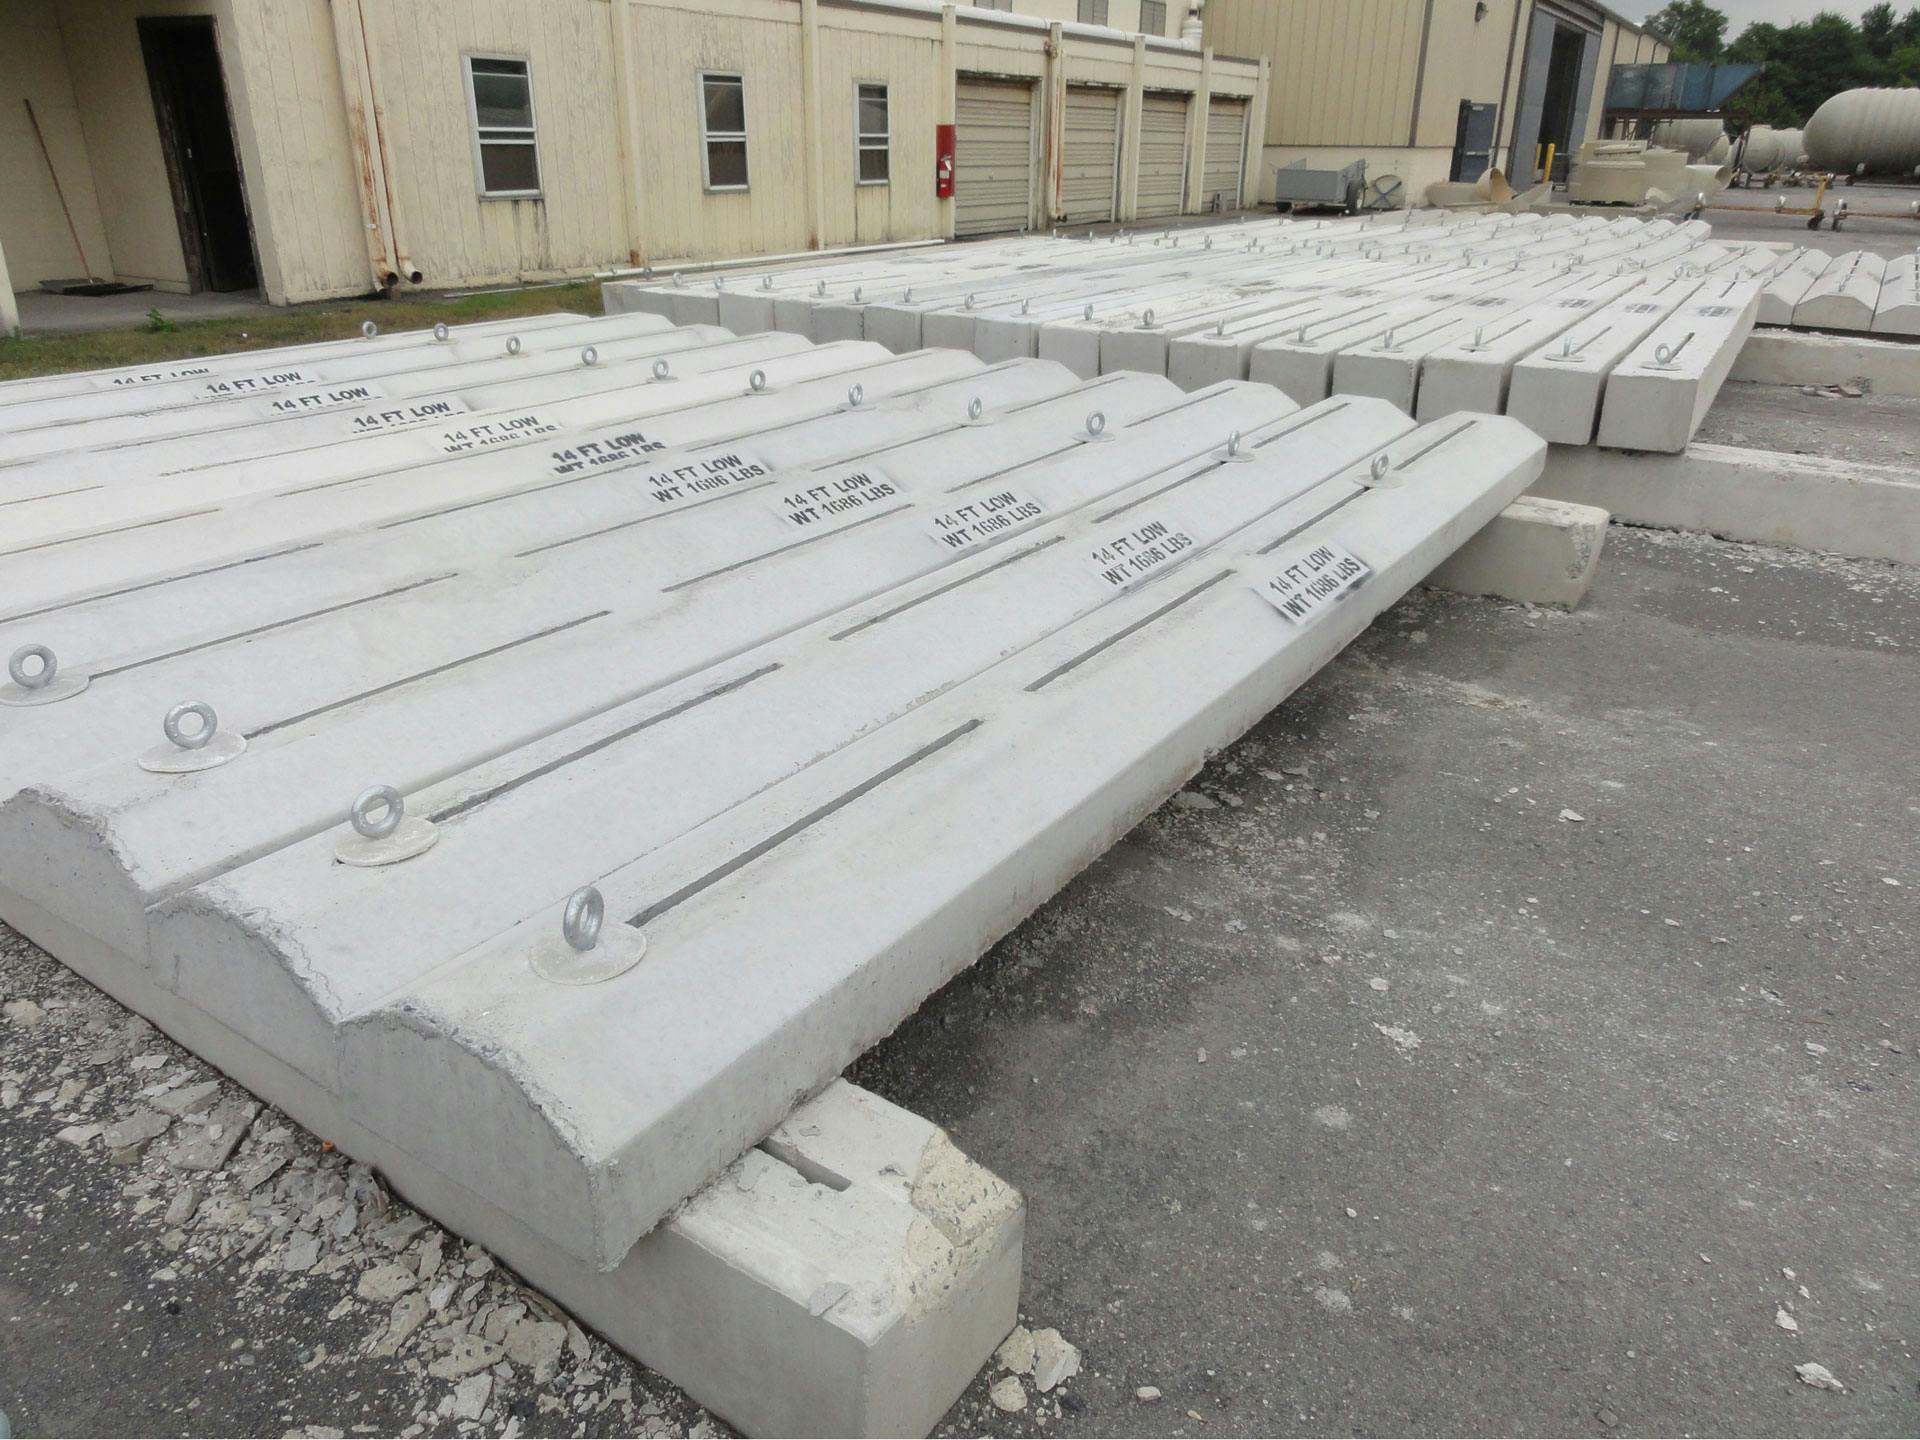 Concrete anchors for underground fiberglass tanks. 